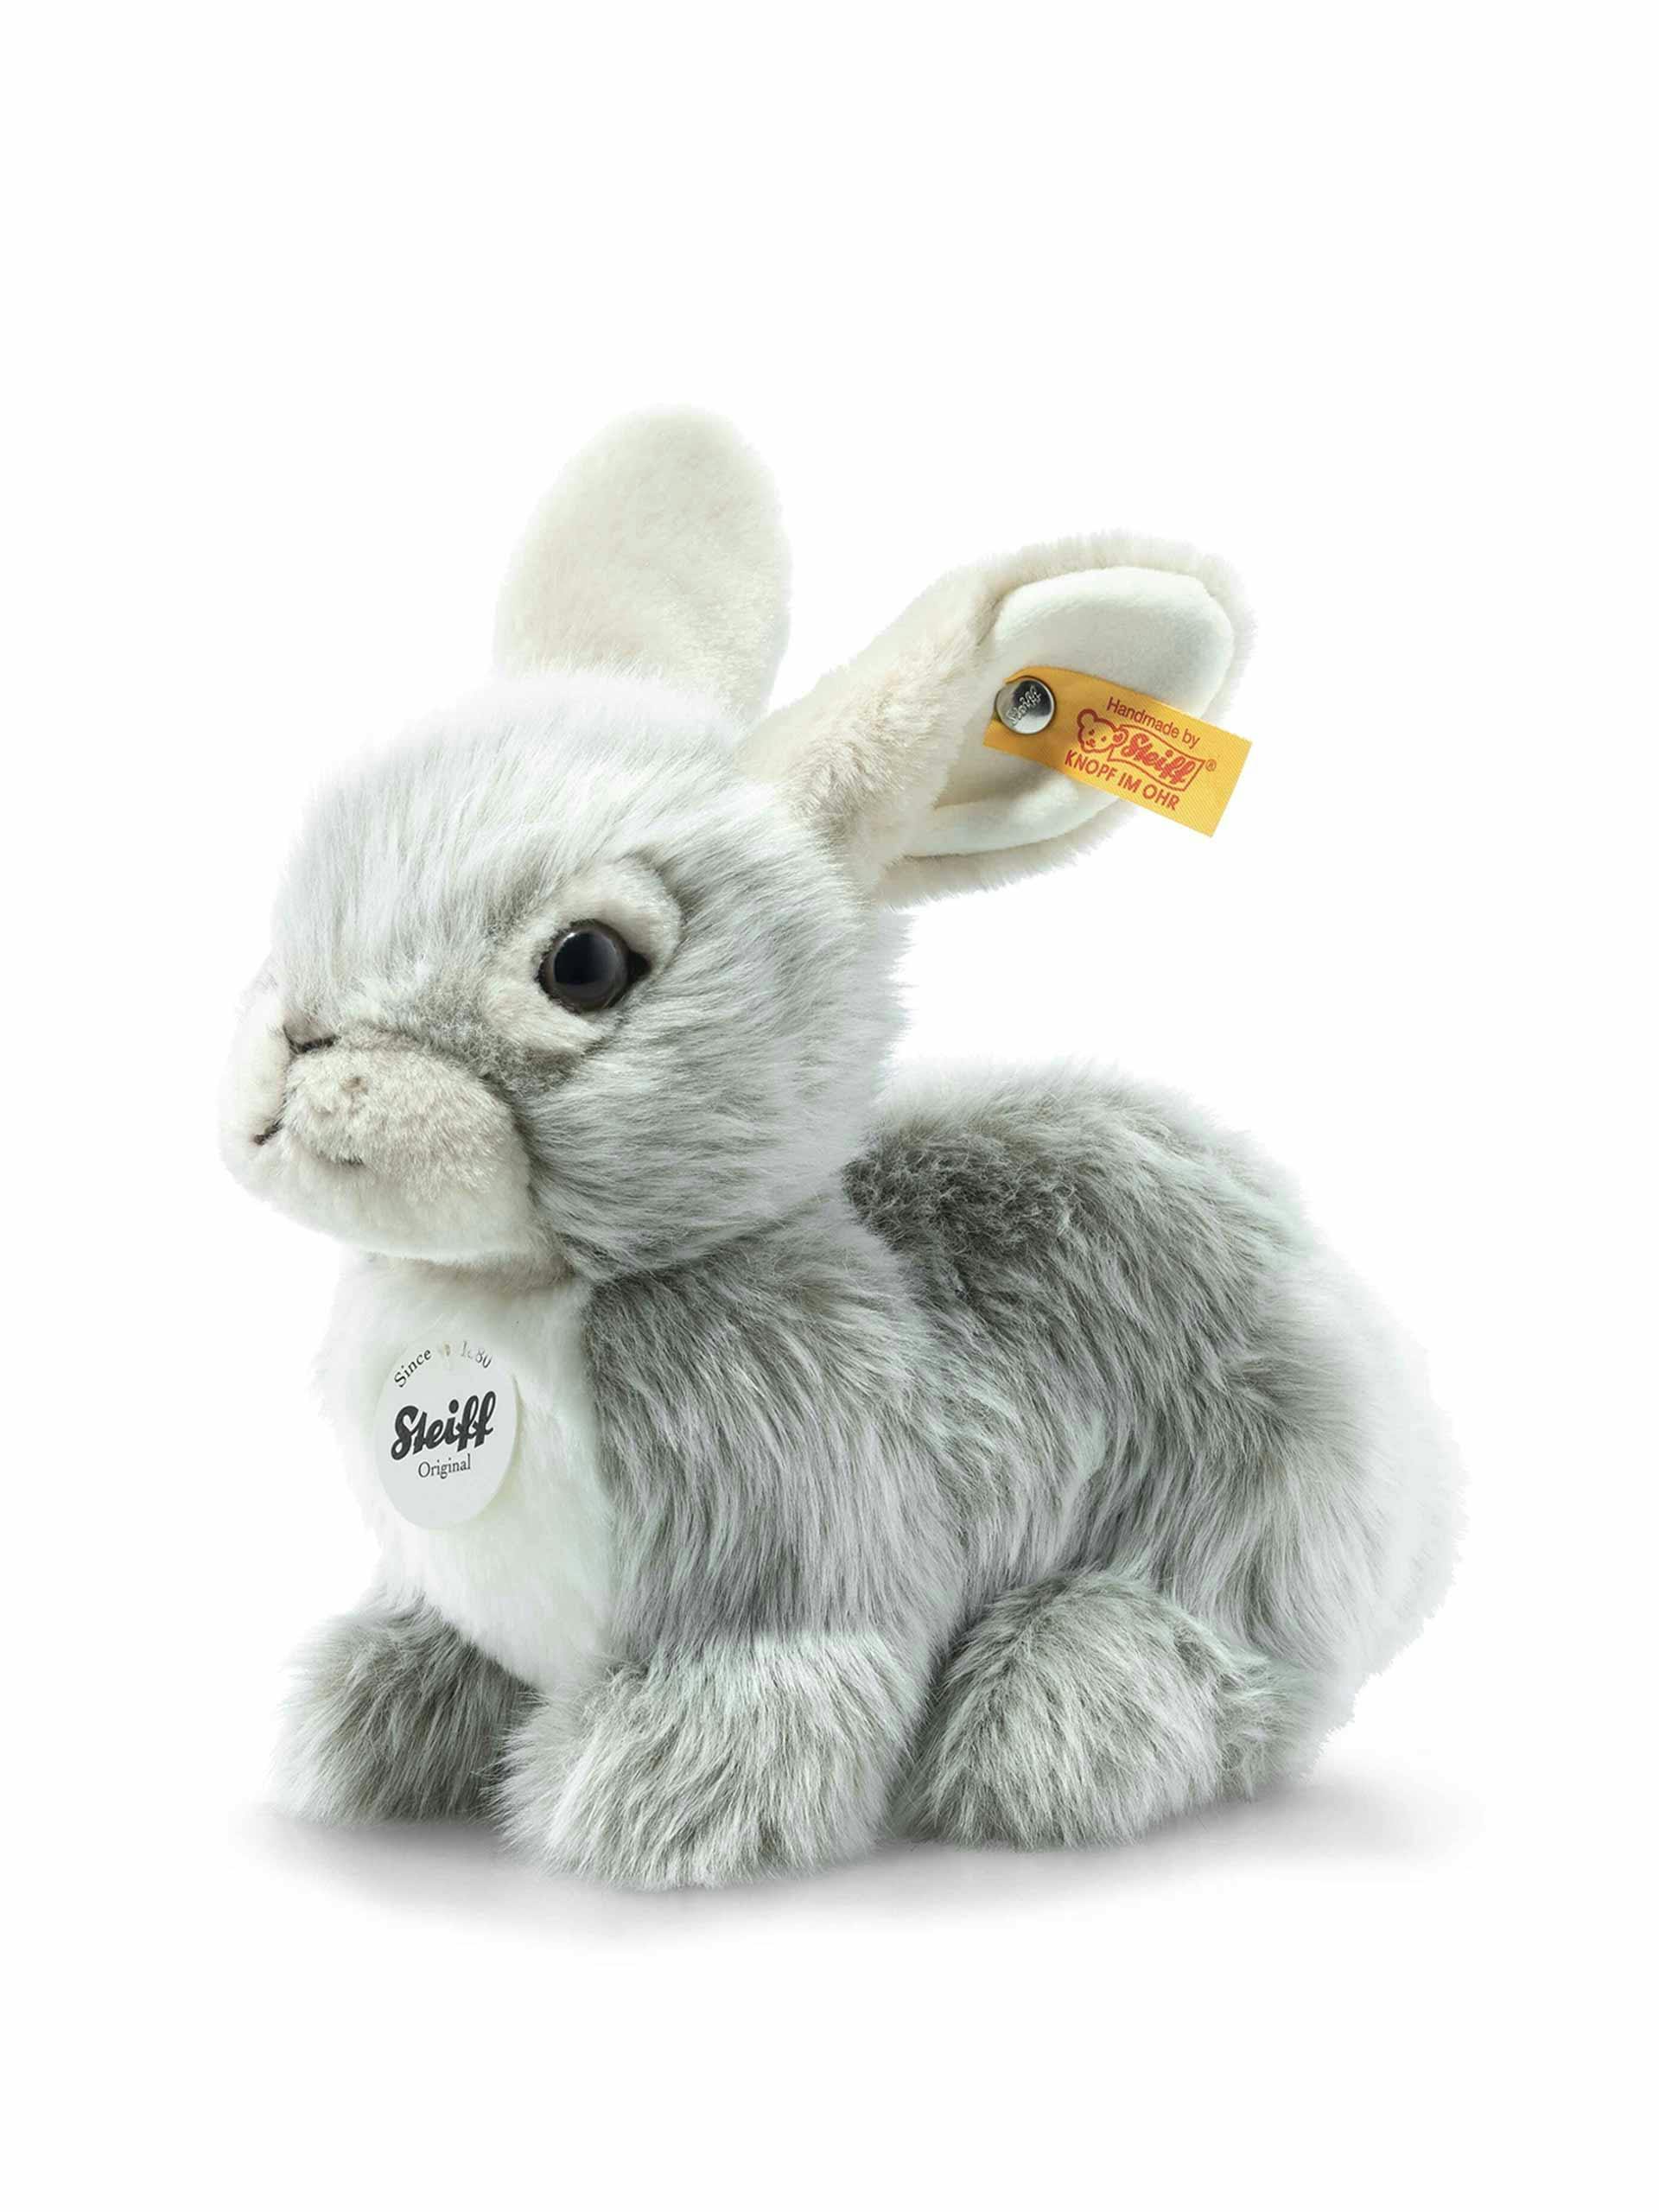 Plush stuffed rabbit